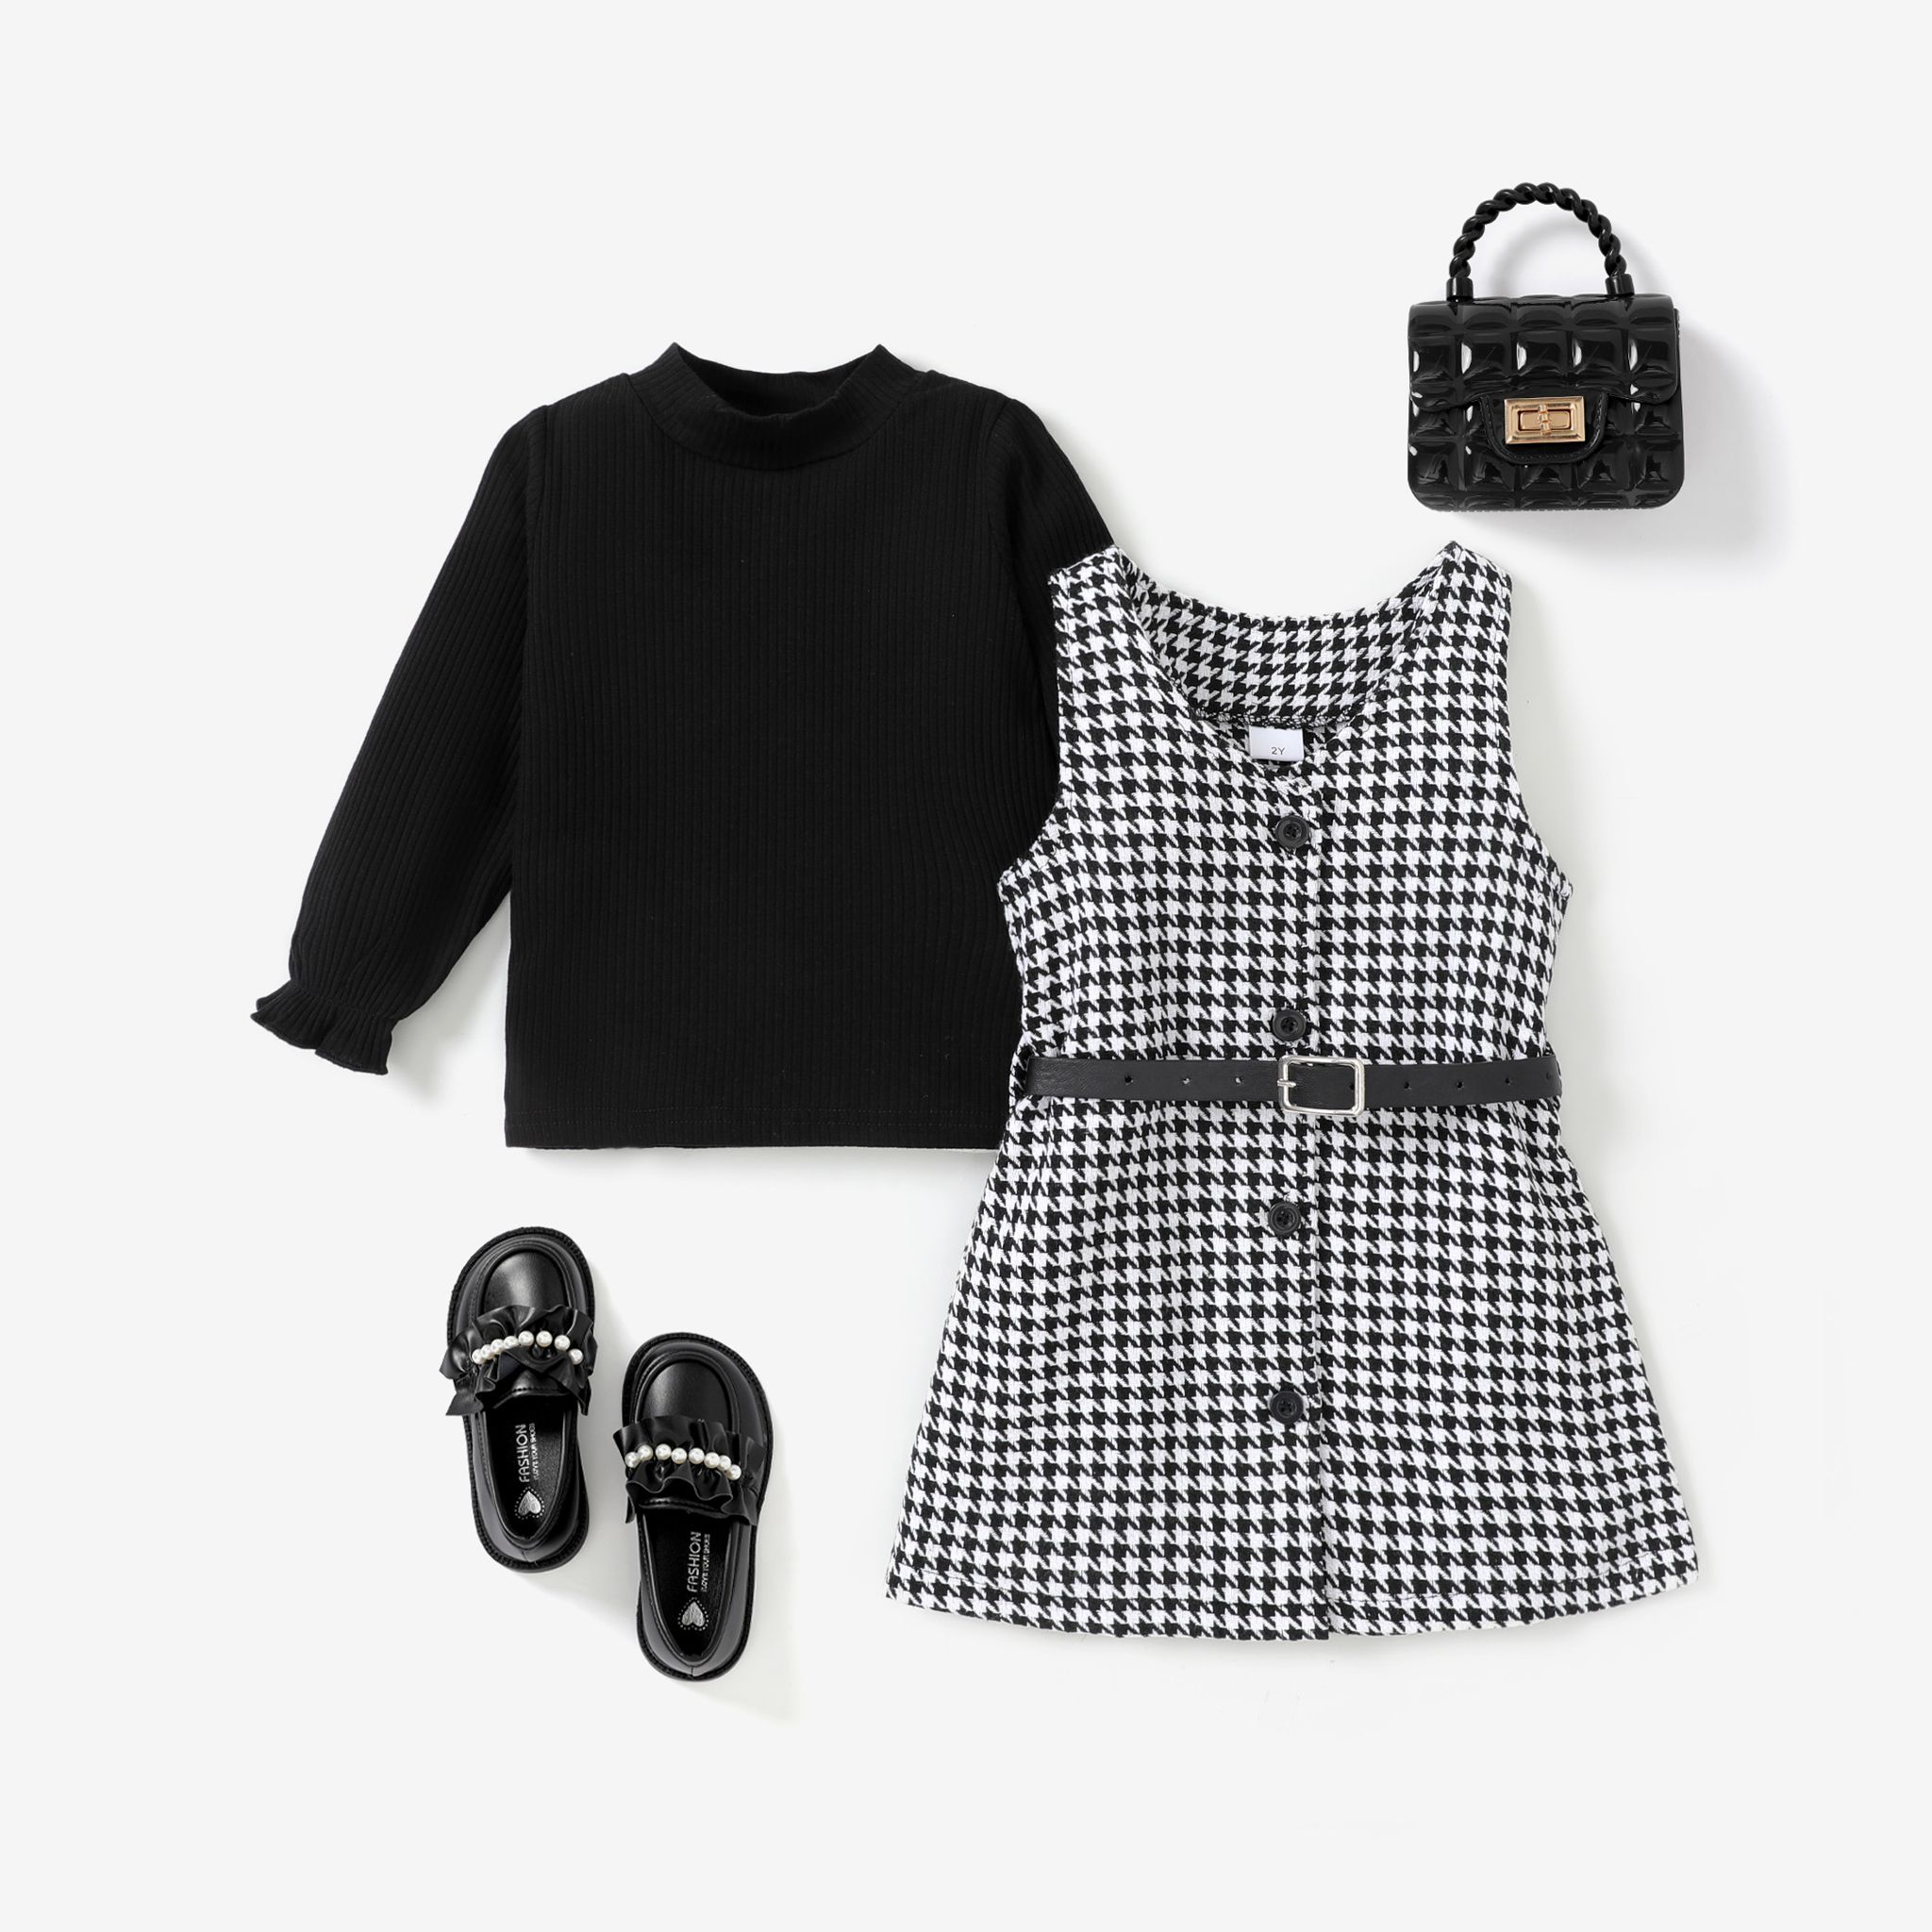 3PCS Toddler Girl Classic Grid/Houndstooth Long Sleeve Dress Set